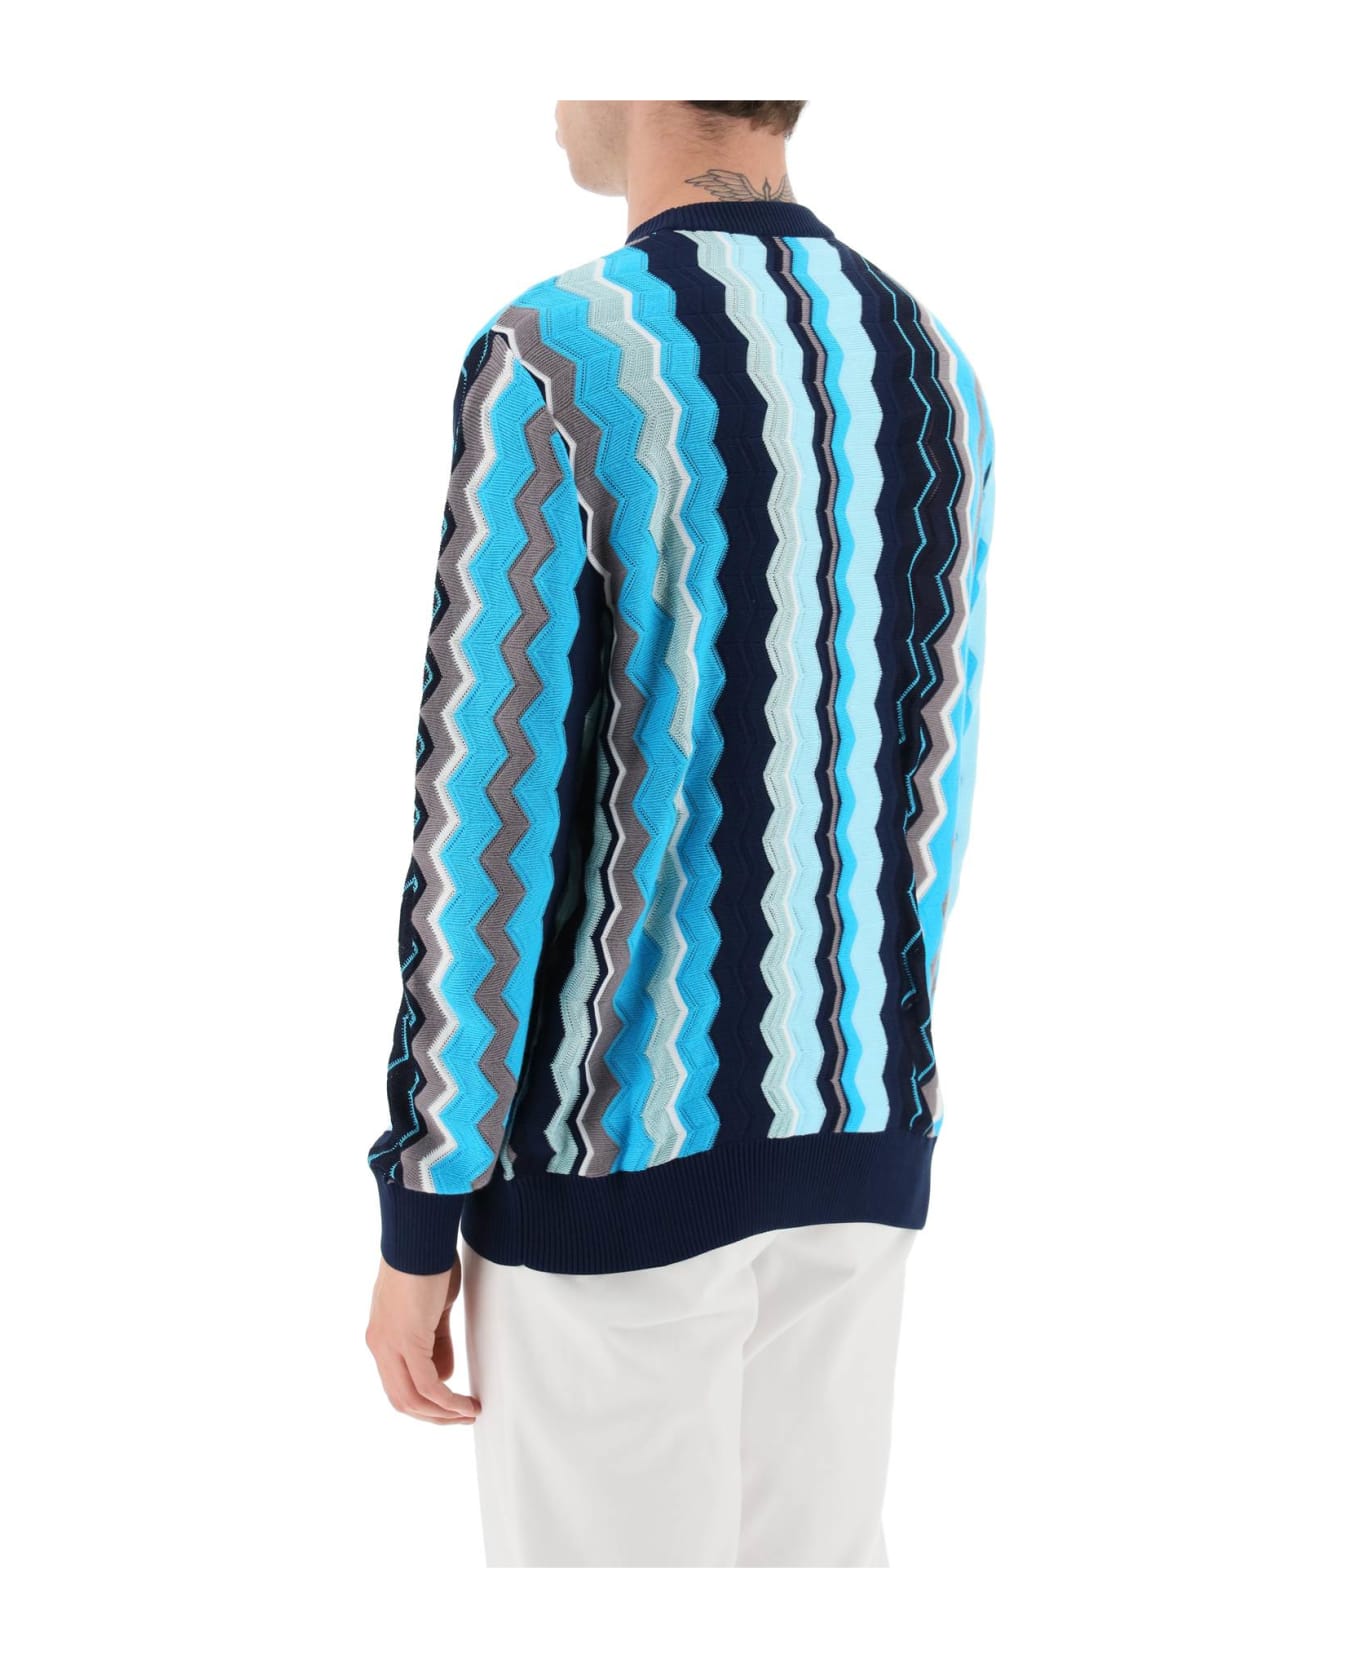 Missoni Zigzag Sweater - WHITE AND BLUE TONES (Blue)